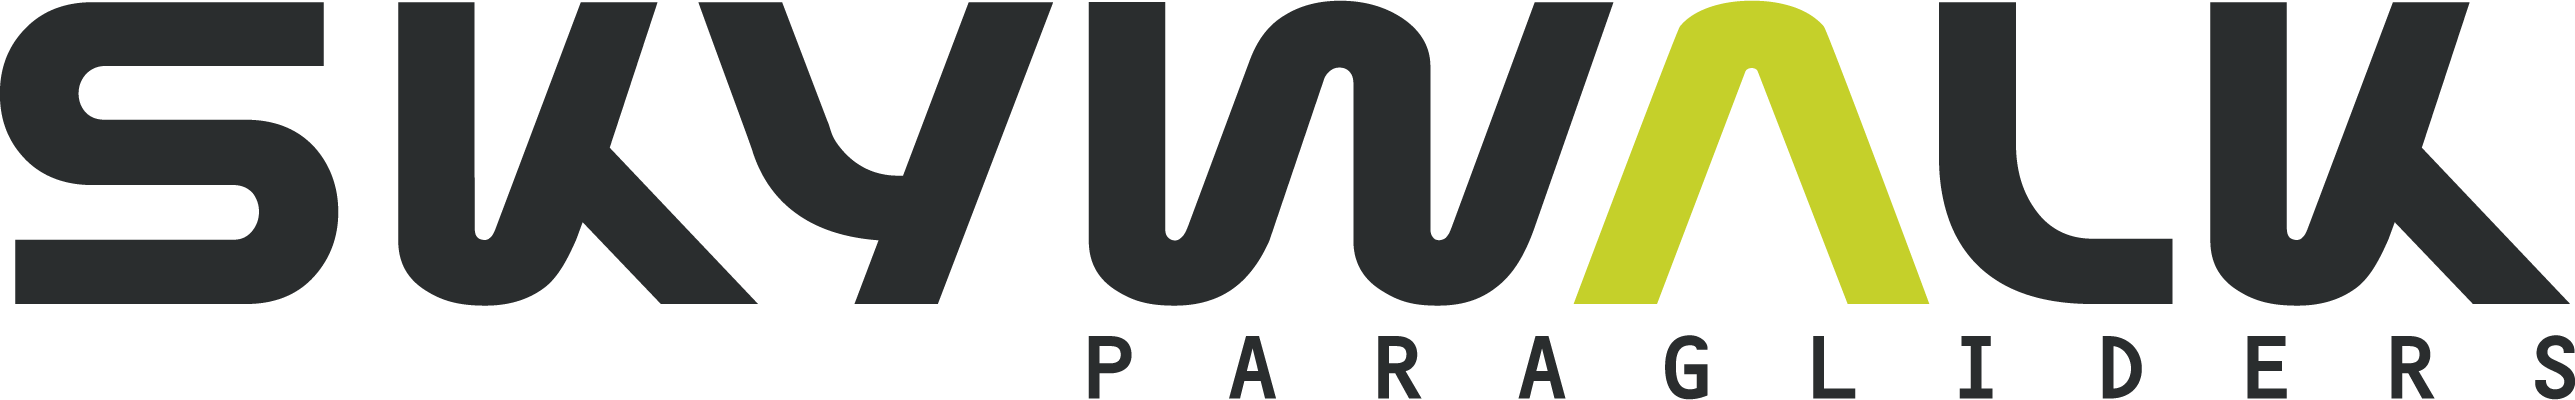 Skywalk Paragliders Logo